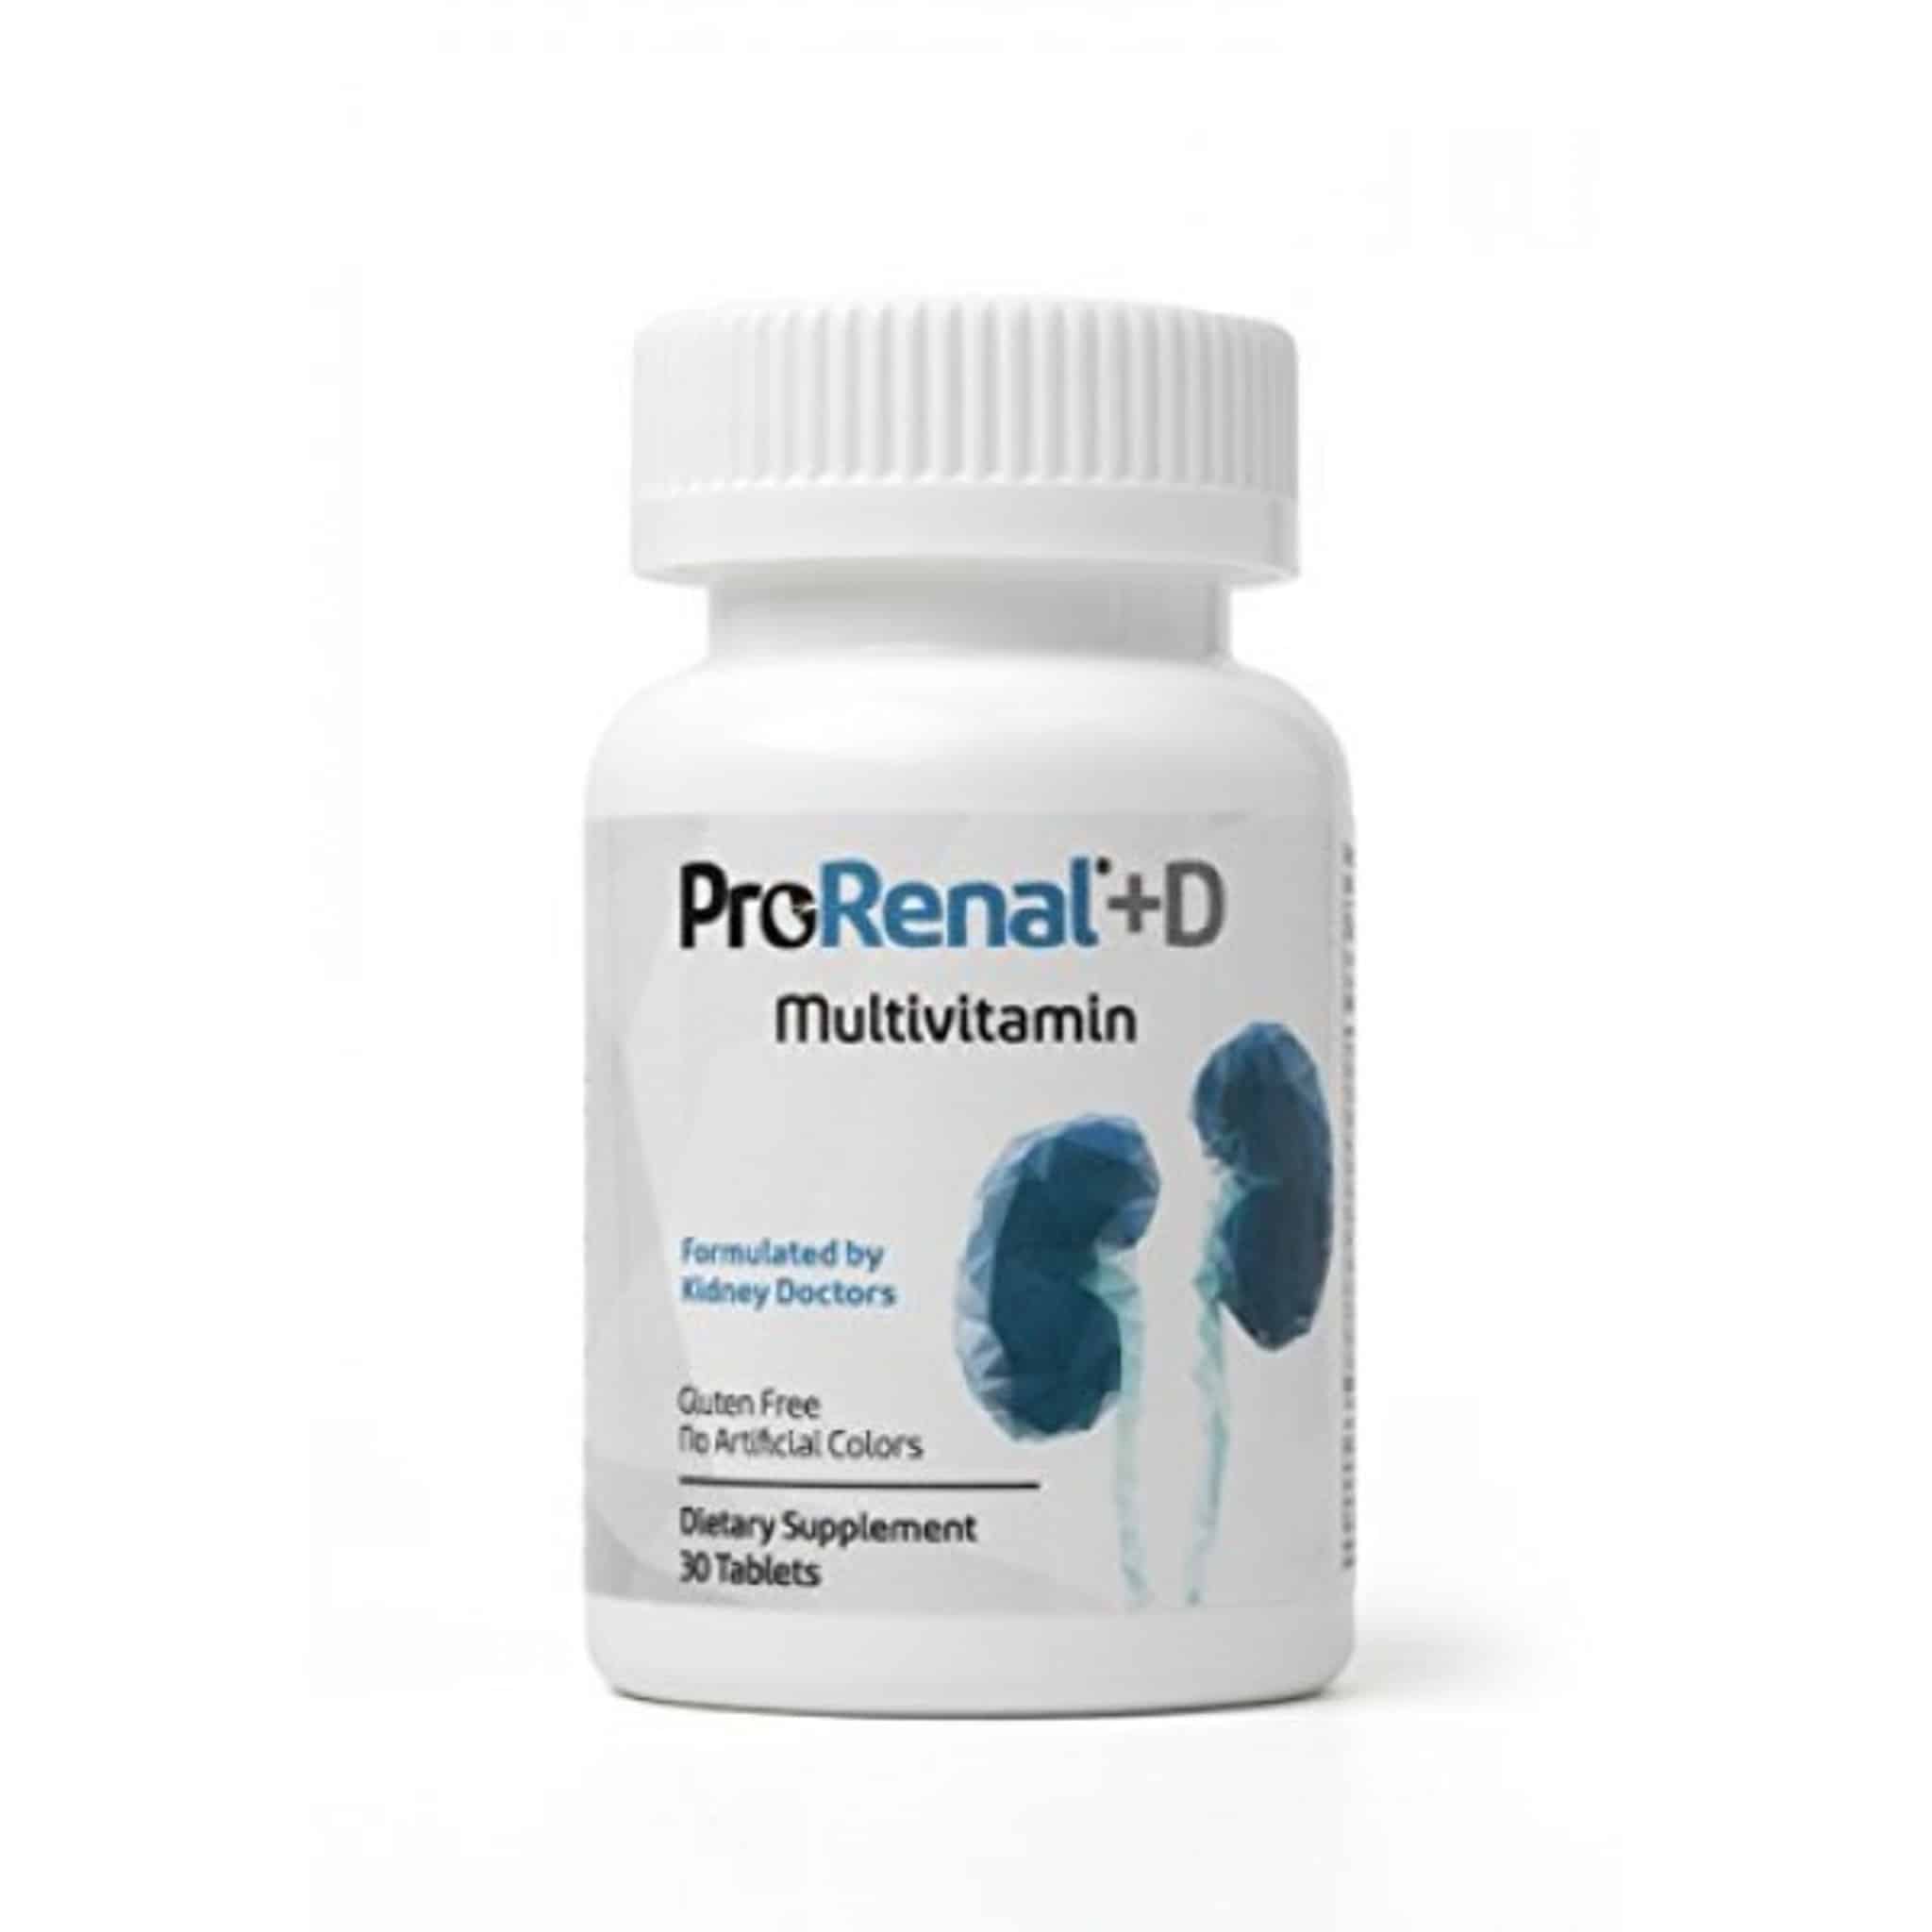 ProRenal+D Multivitamin Daily Multivitamin for Kidney